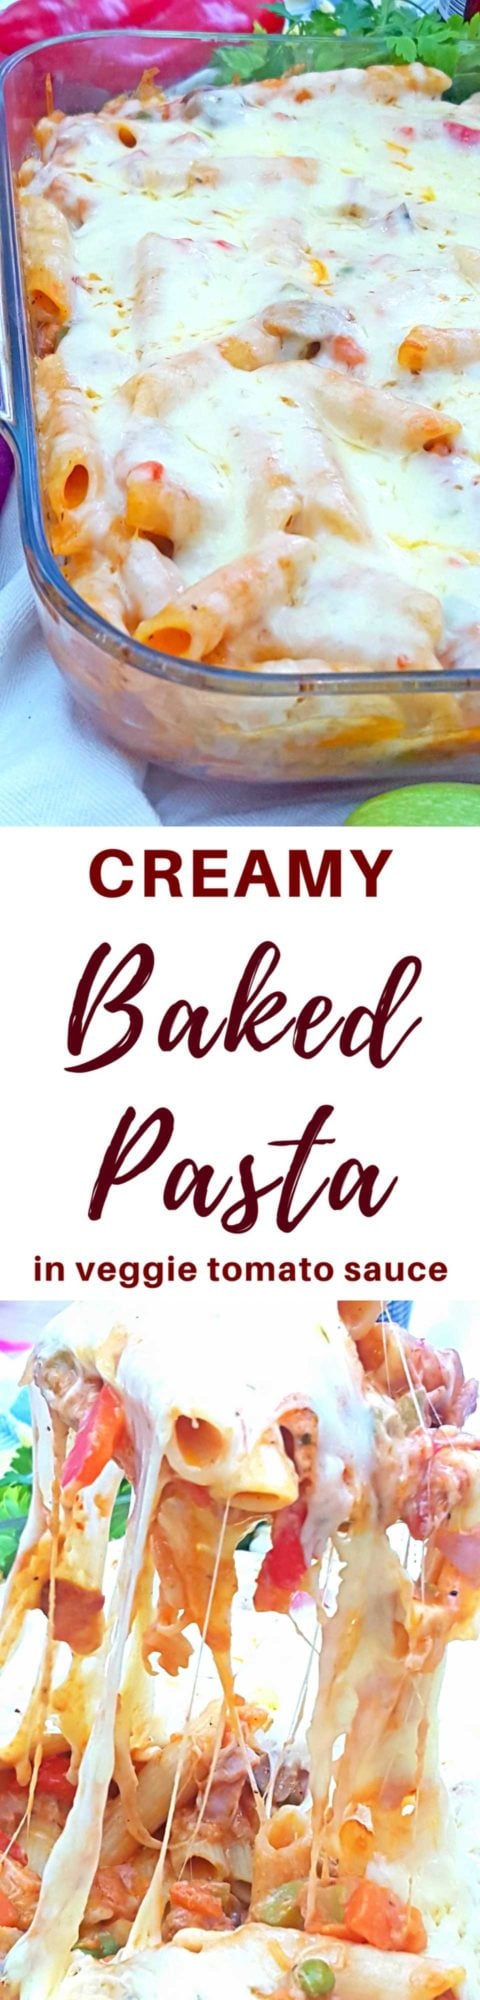 Creamy baked pasta